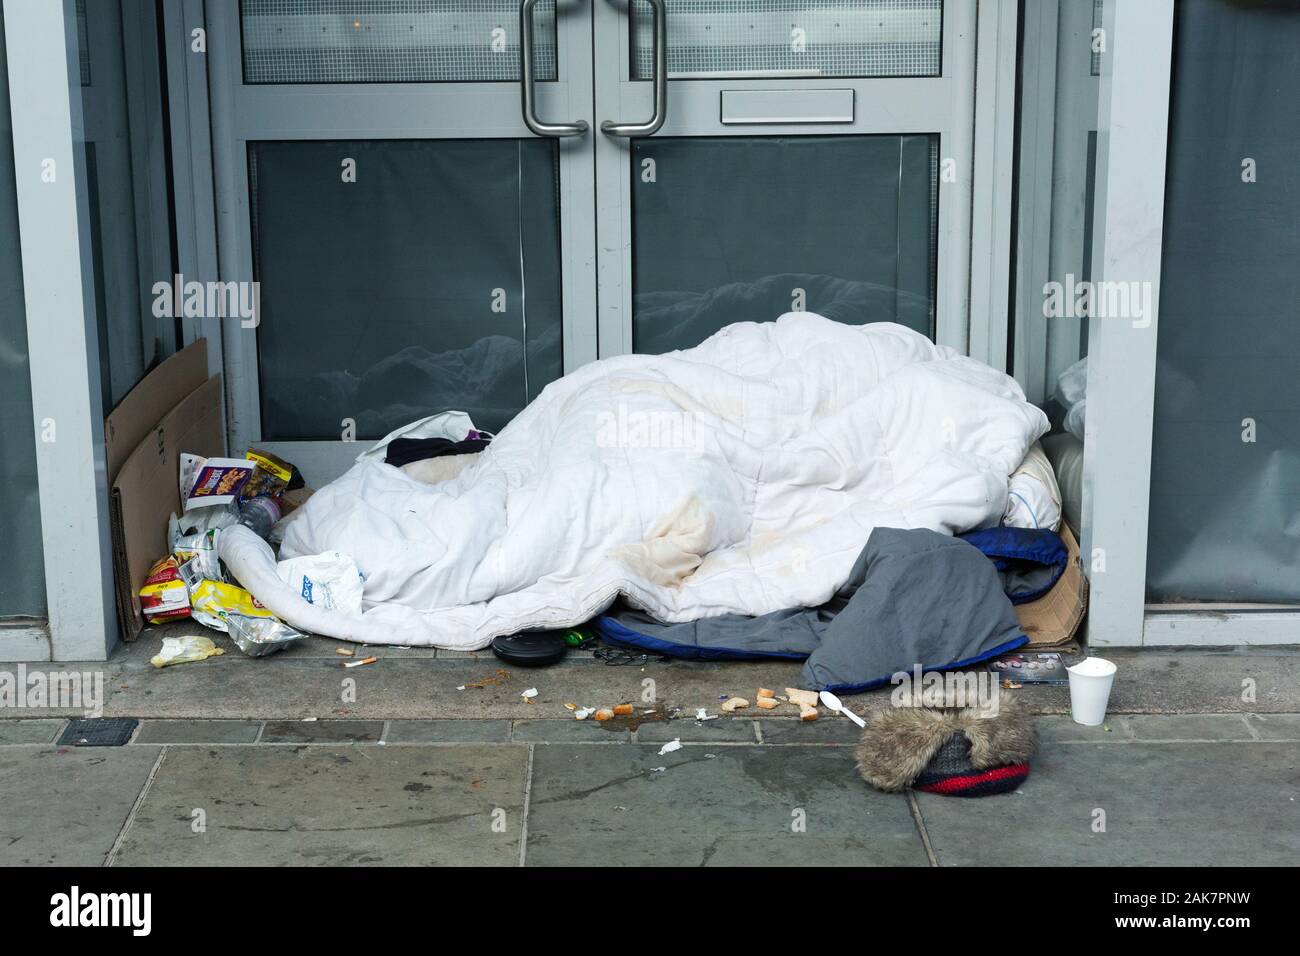 person sleeping rough under blanket in doorway Colchester, Essex, UK Stock Photo